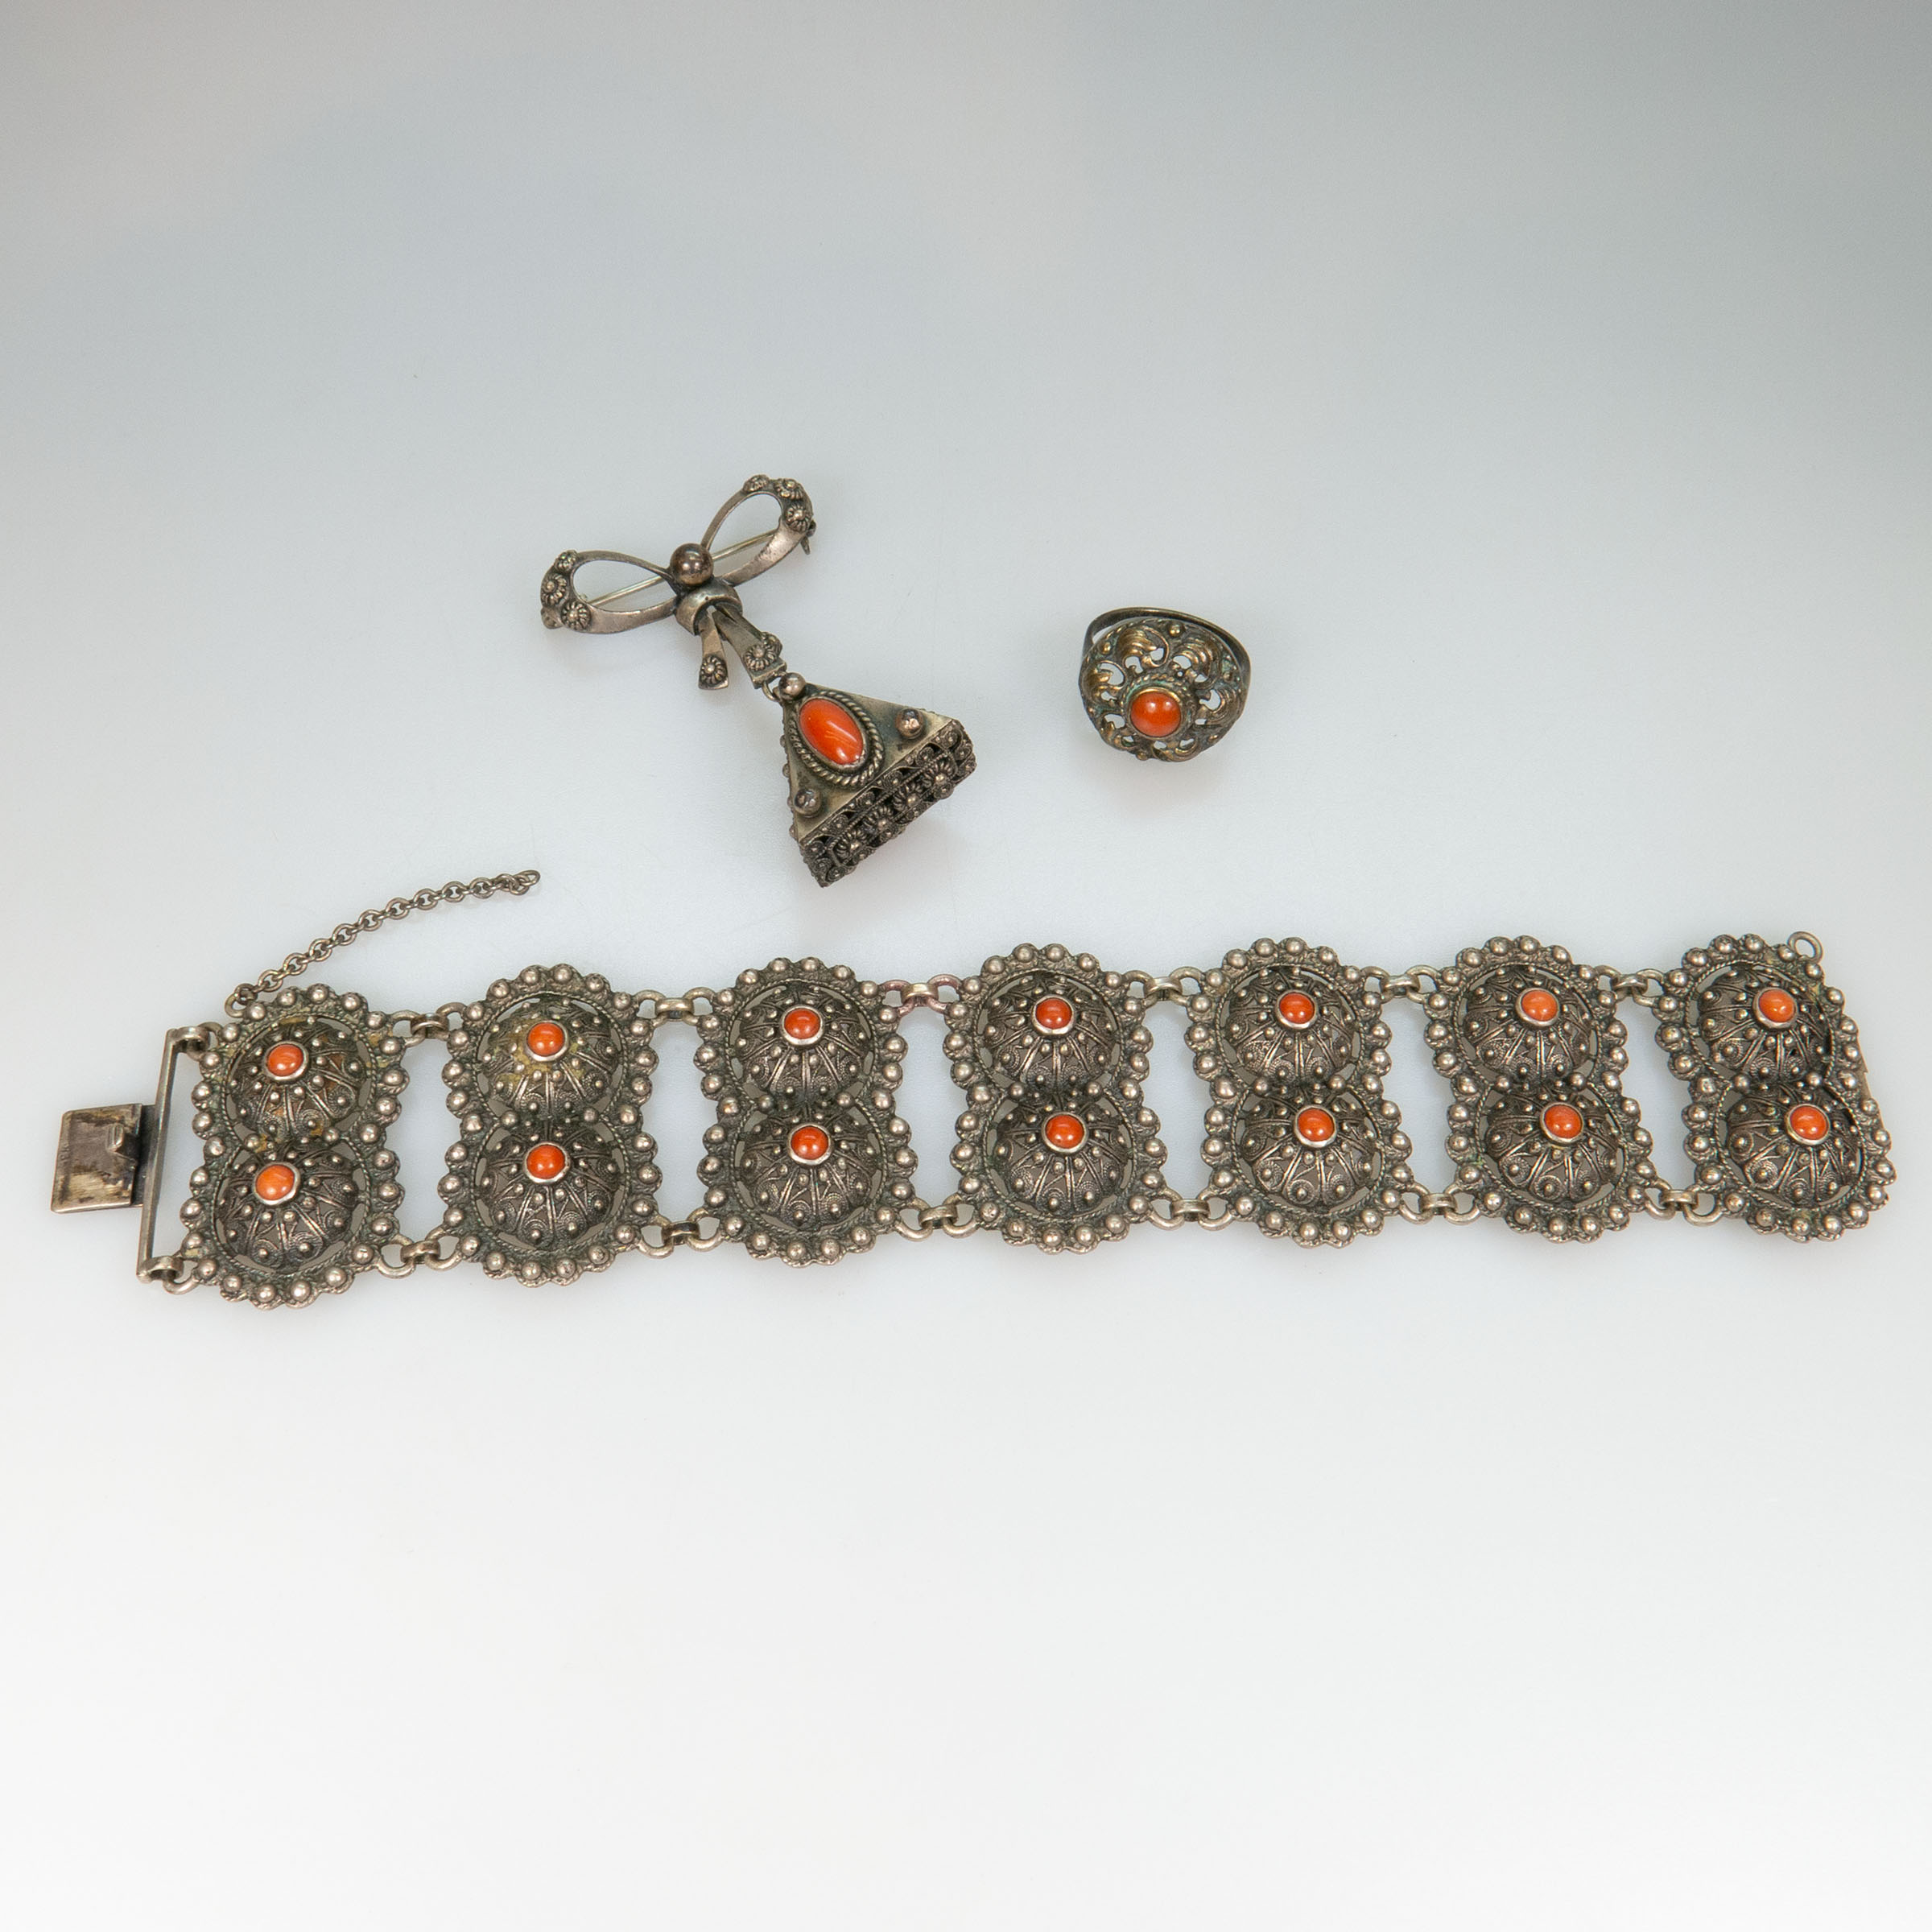 835 Grade Silver Filigree Bracelet And Ring